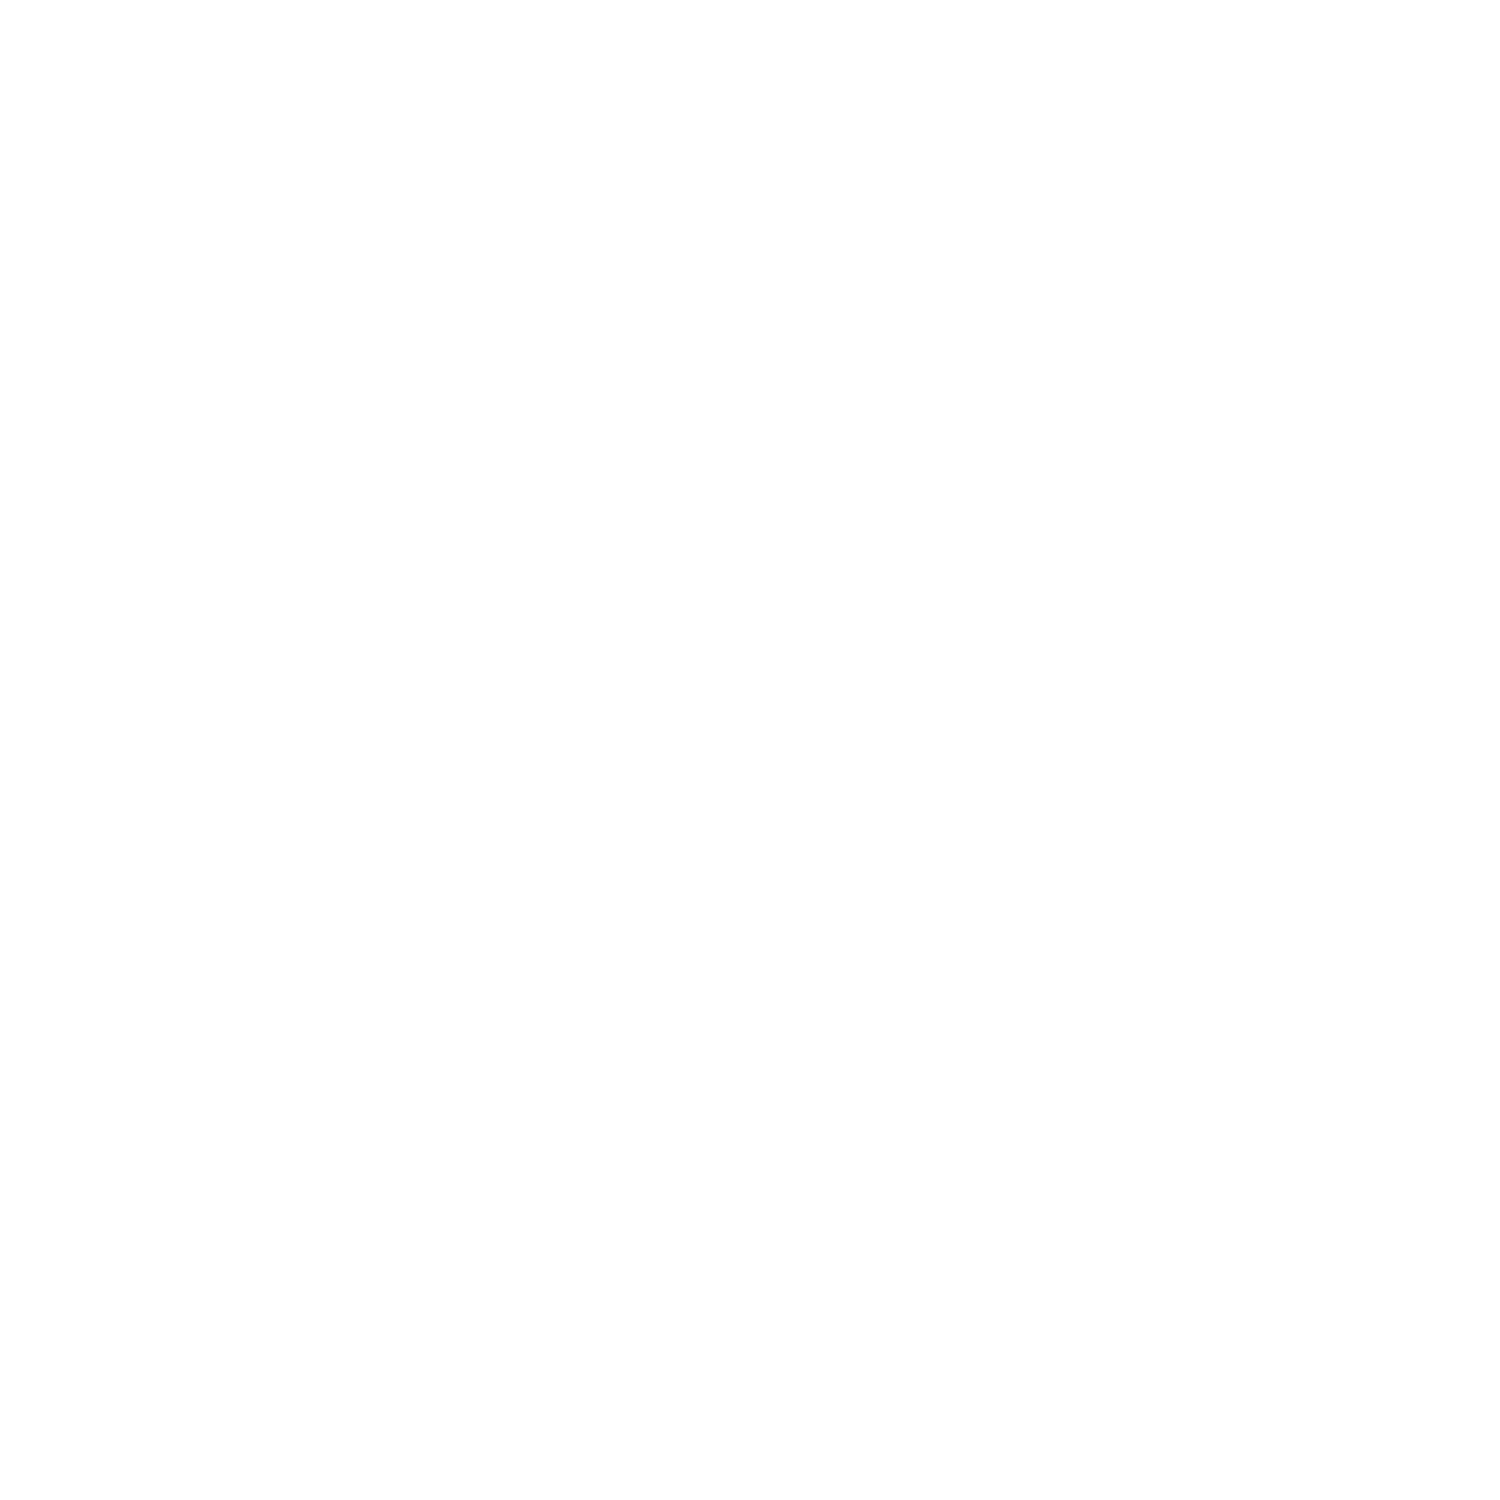 ProjectBank